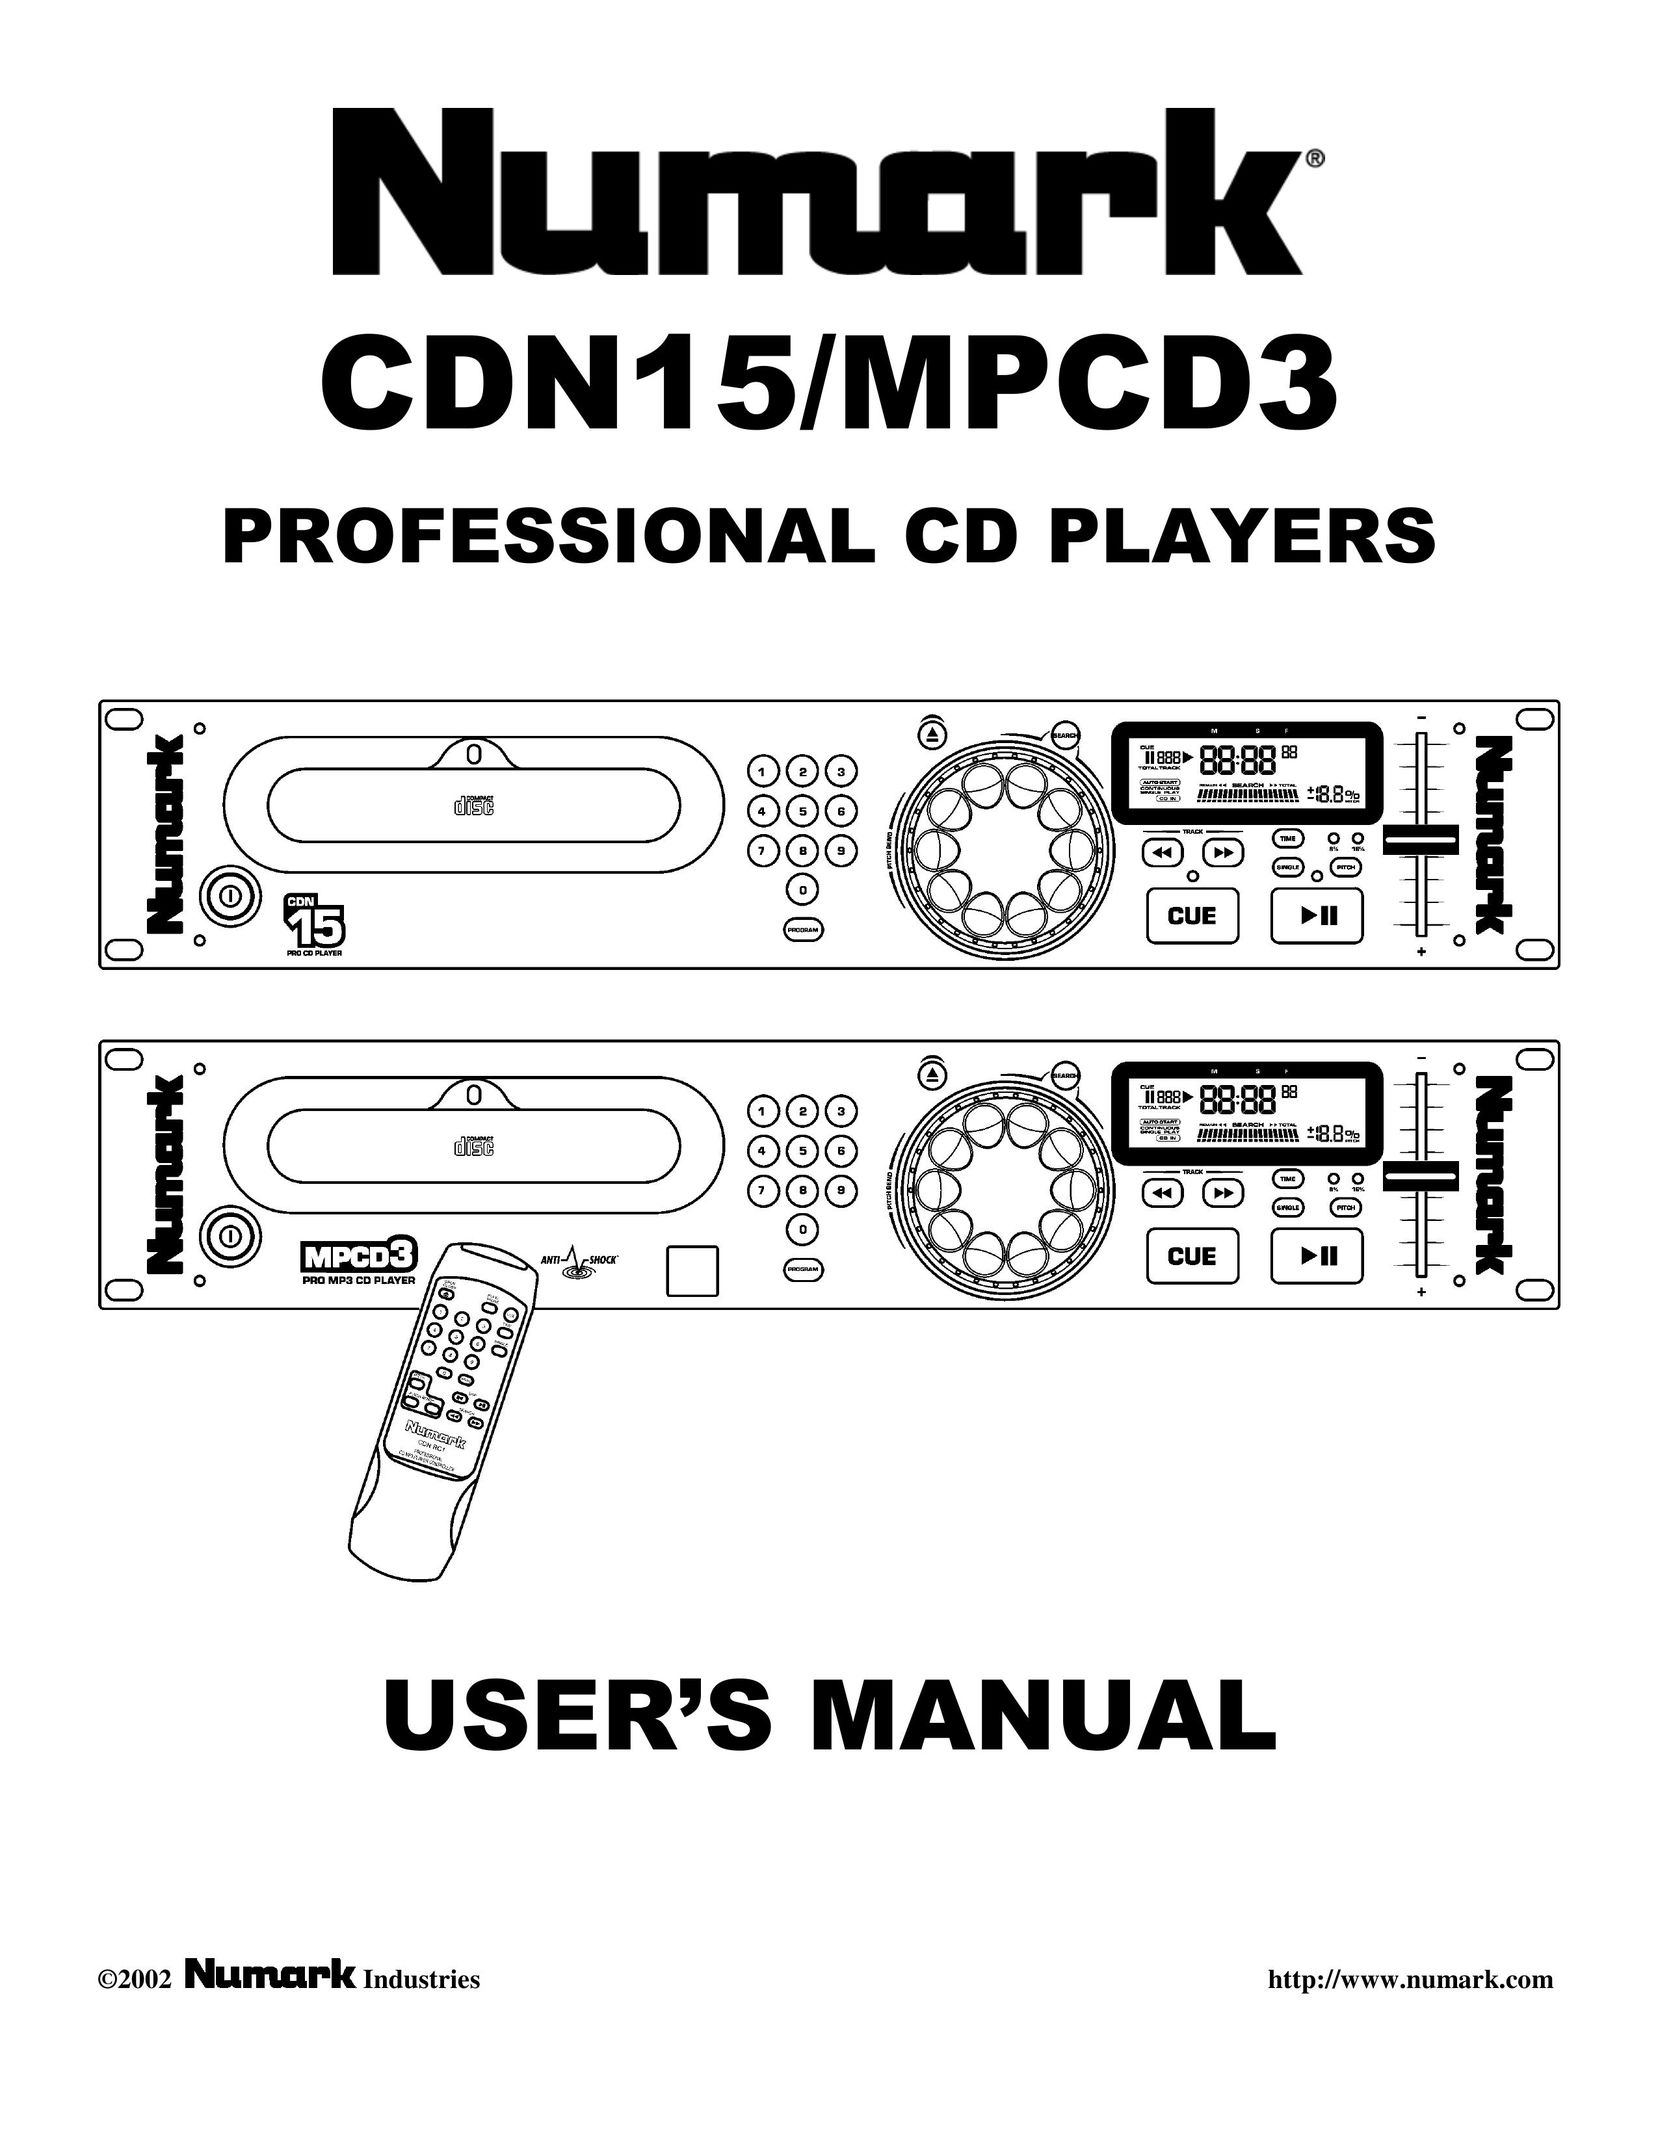 Numark Industries MPCD3 CD Player User Manual